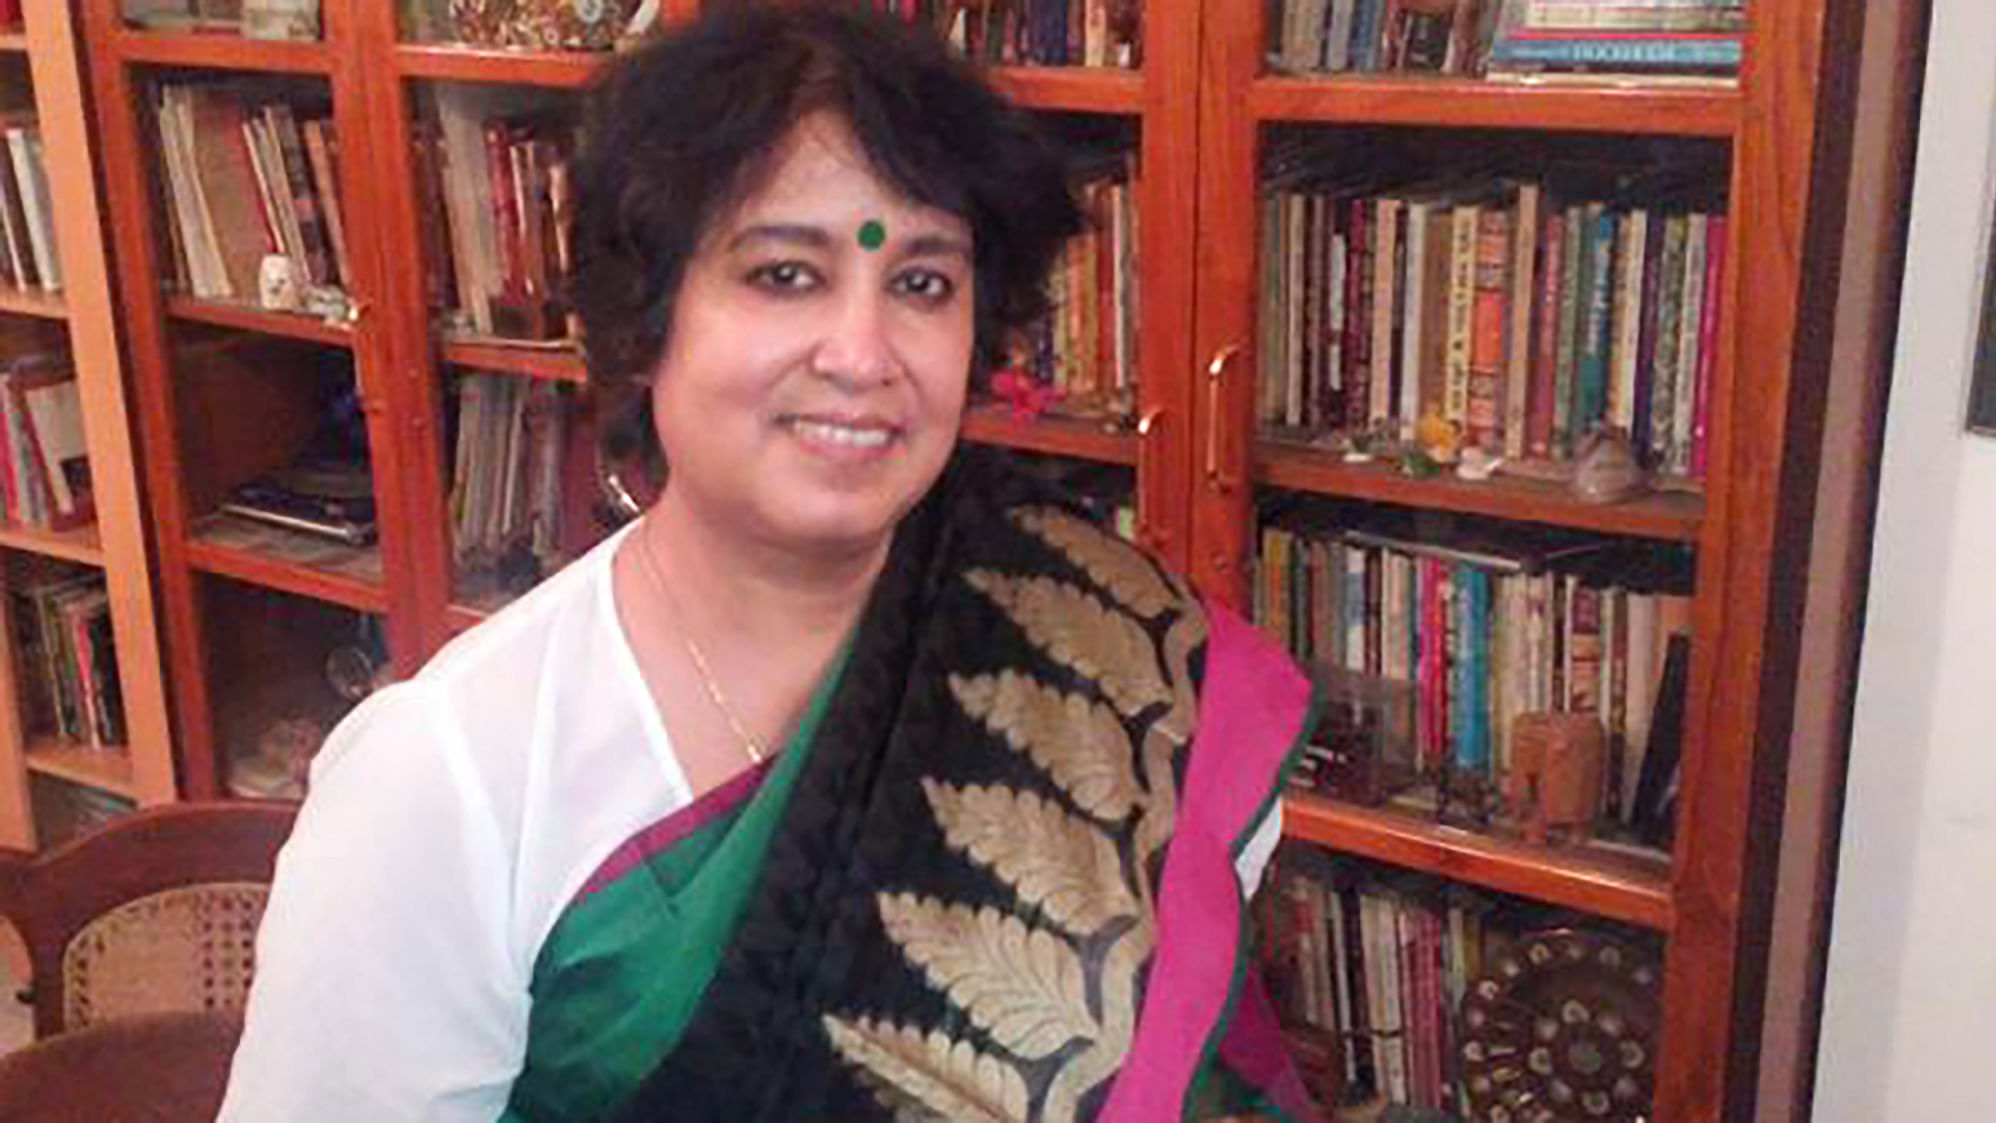 Critically acclaimed Bangladeshi author Taslima Nasreen. (Photo: <a href="https://twitter.com/taslimanasreen/status/651860720141905920">Twitter</a>)